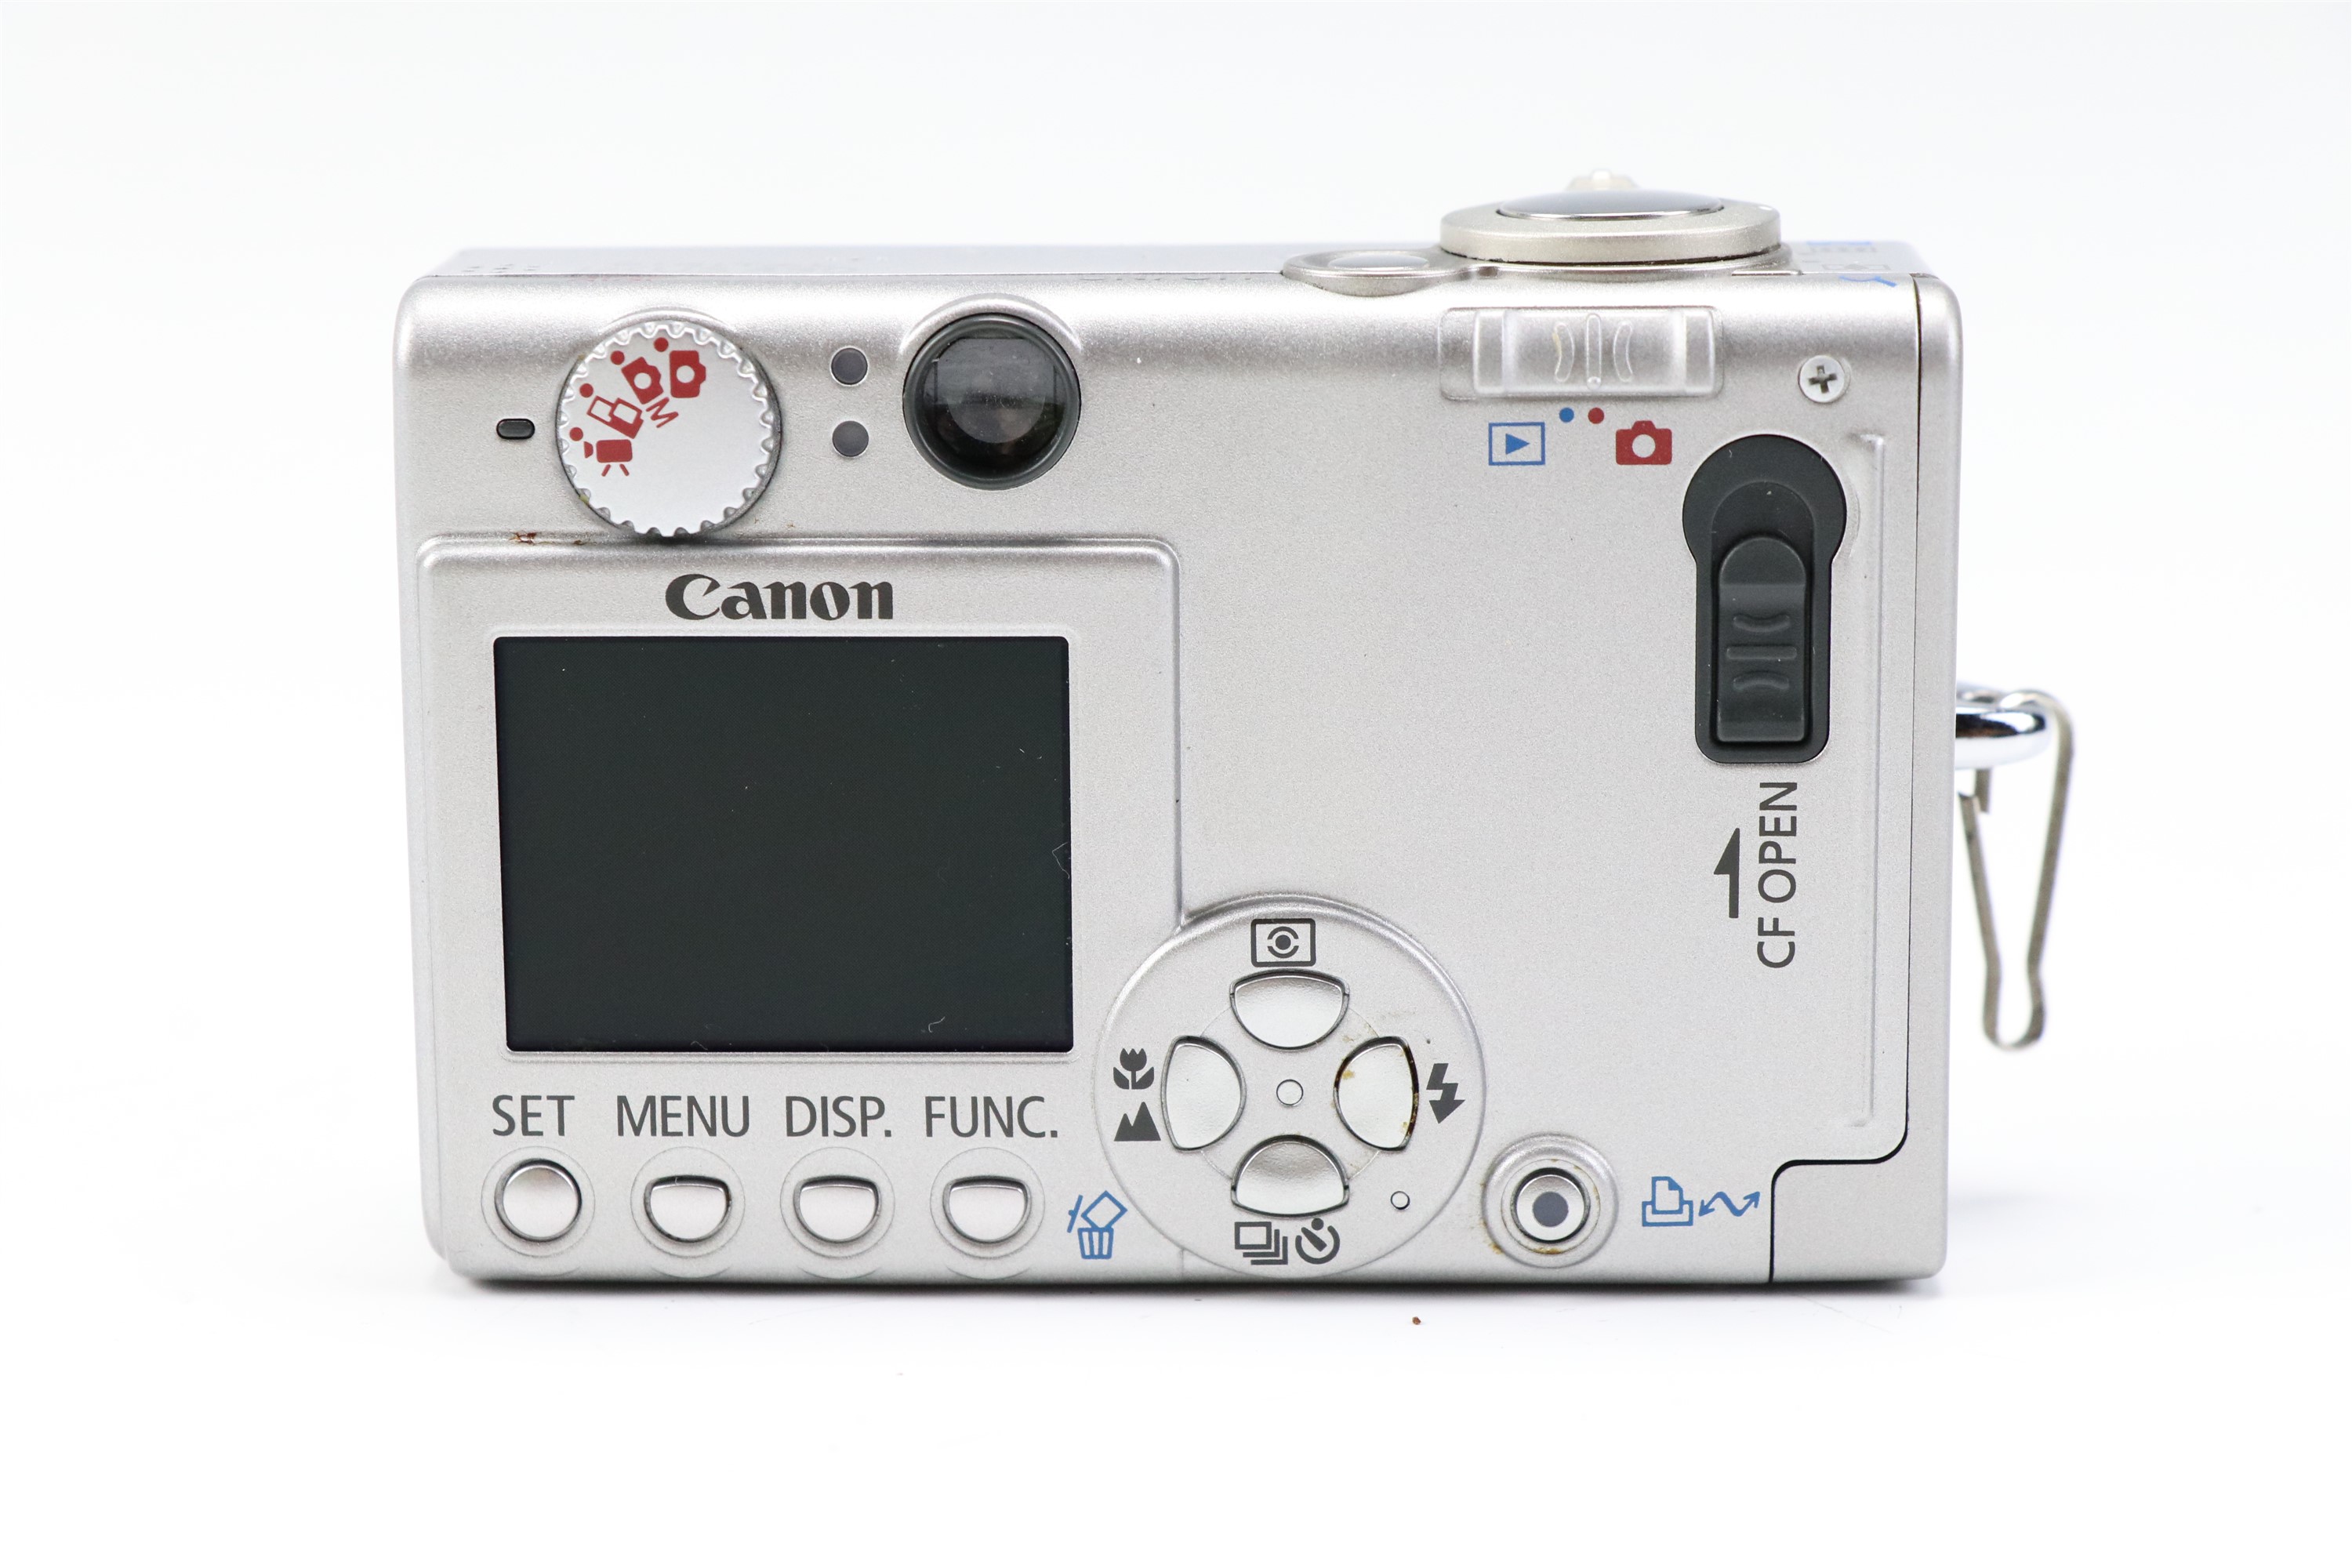 Lumix F238 HD, Canon EOS IX, Canon Digital IXUS 430, Konica Minolta Dimage 25 and Konica C35 EFP - Image 8 of 24